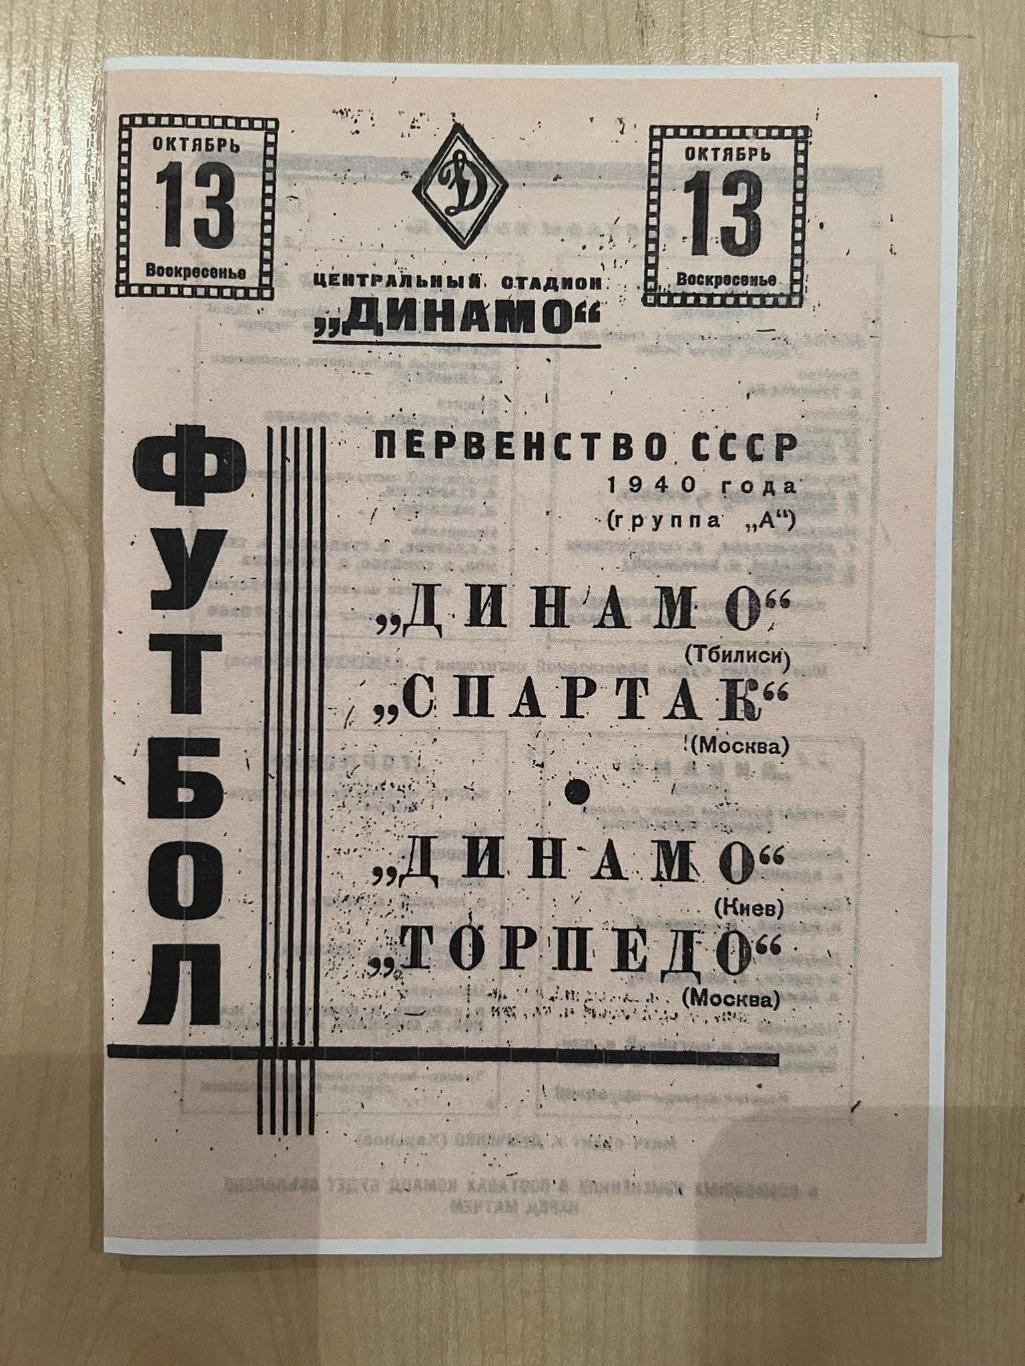 Спартак - Динамо Тбилиси + Торпедо Москва - Динамо Киев 1940 копия